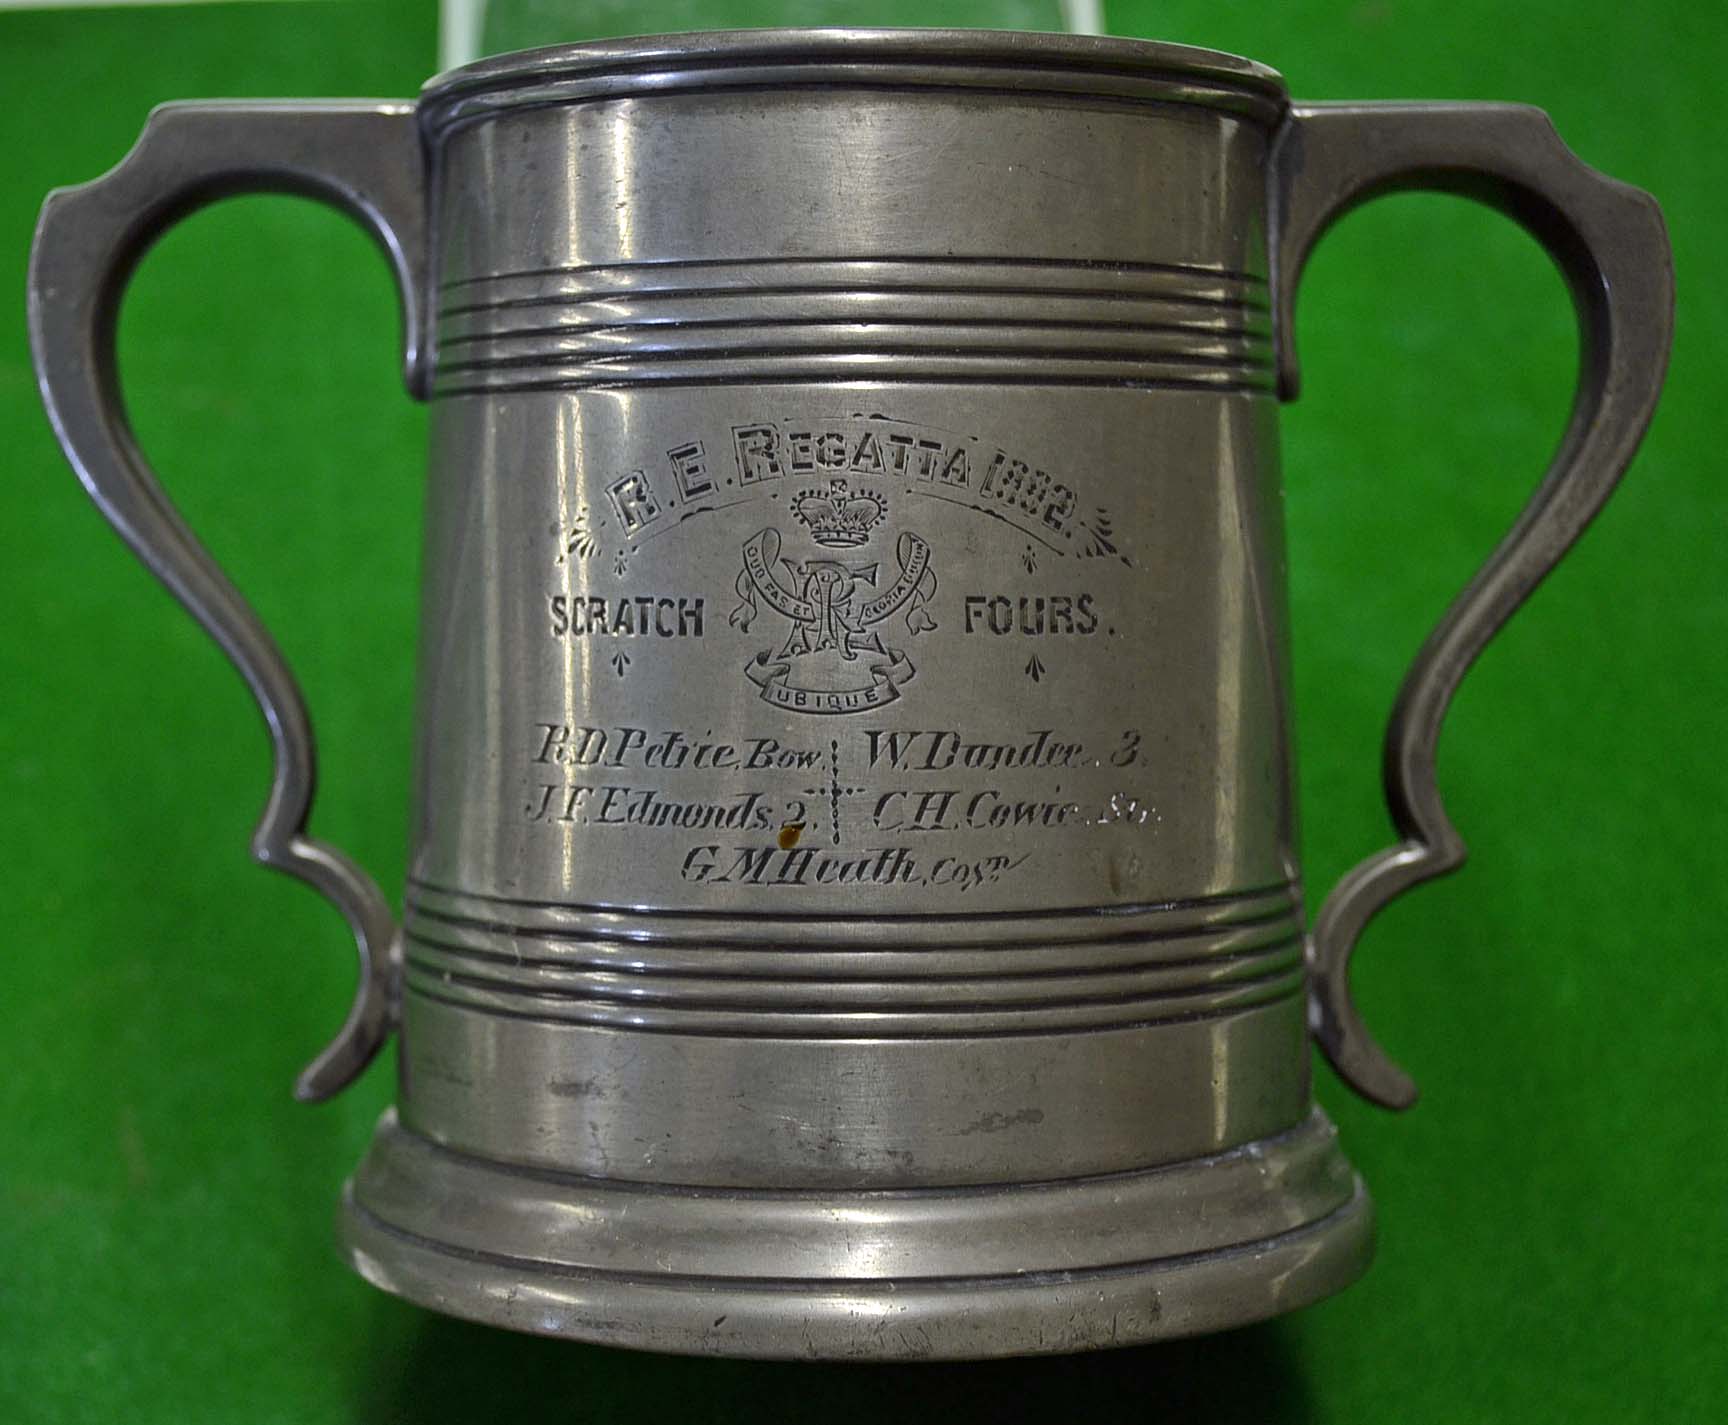 1882 Rowing regatta pewter trophy – the double handled 1pt tankard is engraved "R.E. Regatta